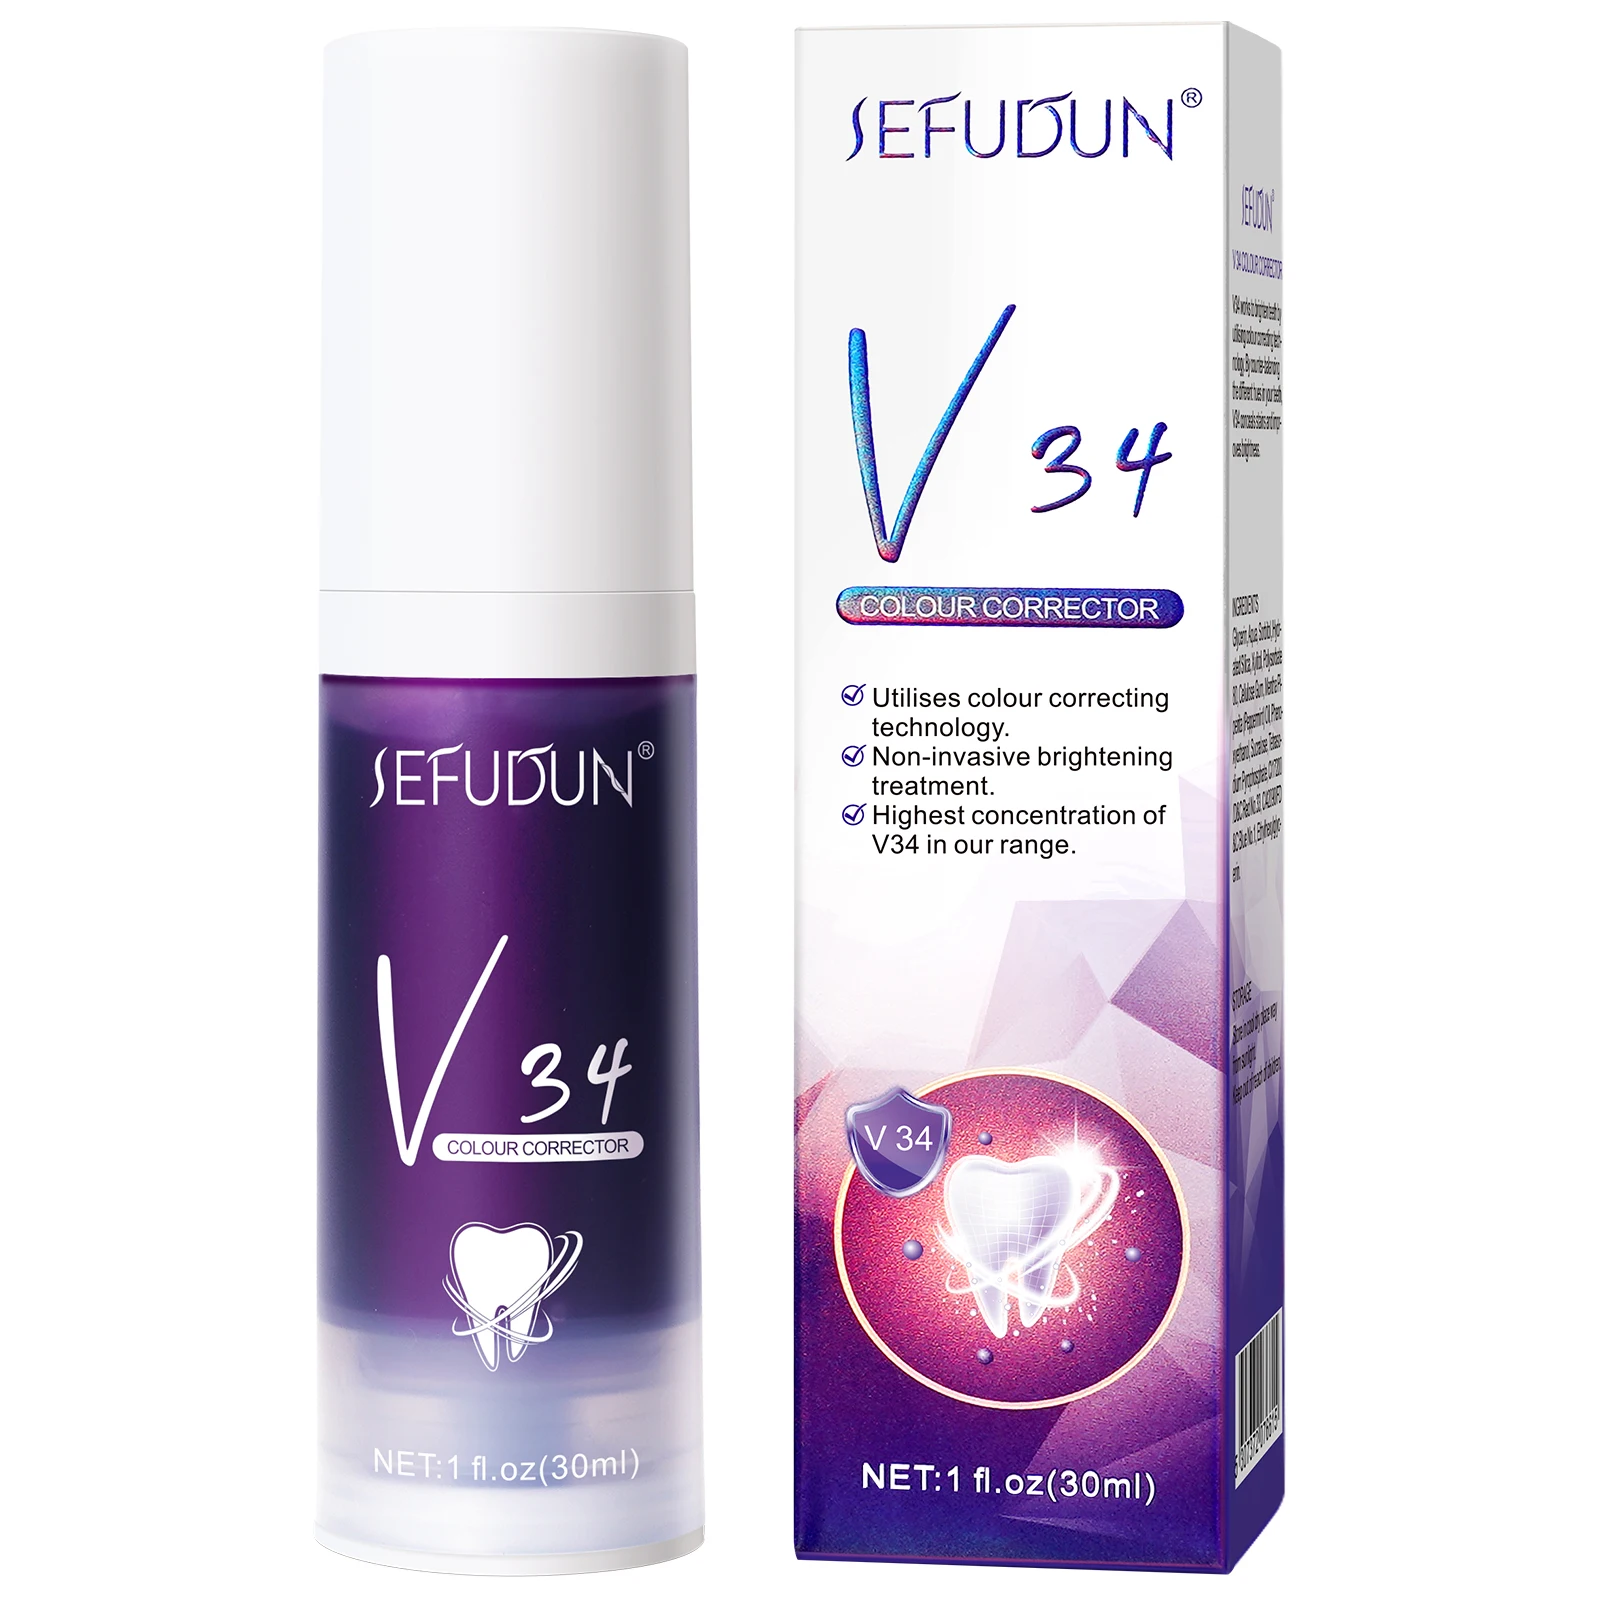 

SEFUDUN Non-invasive Brightening Treatment Conceals Stains Purple V34 Teeth Colour Corrector Foam